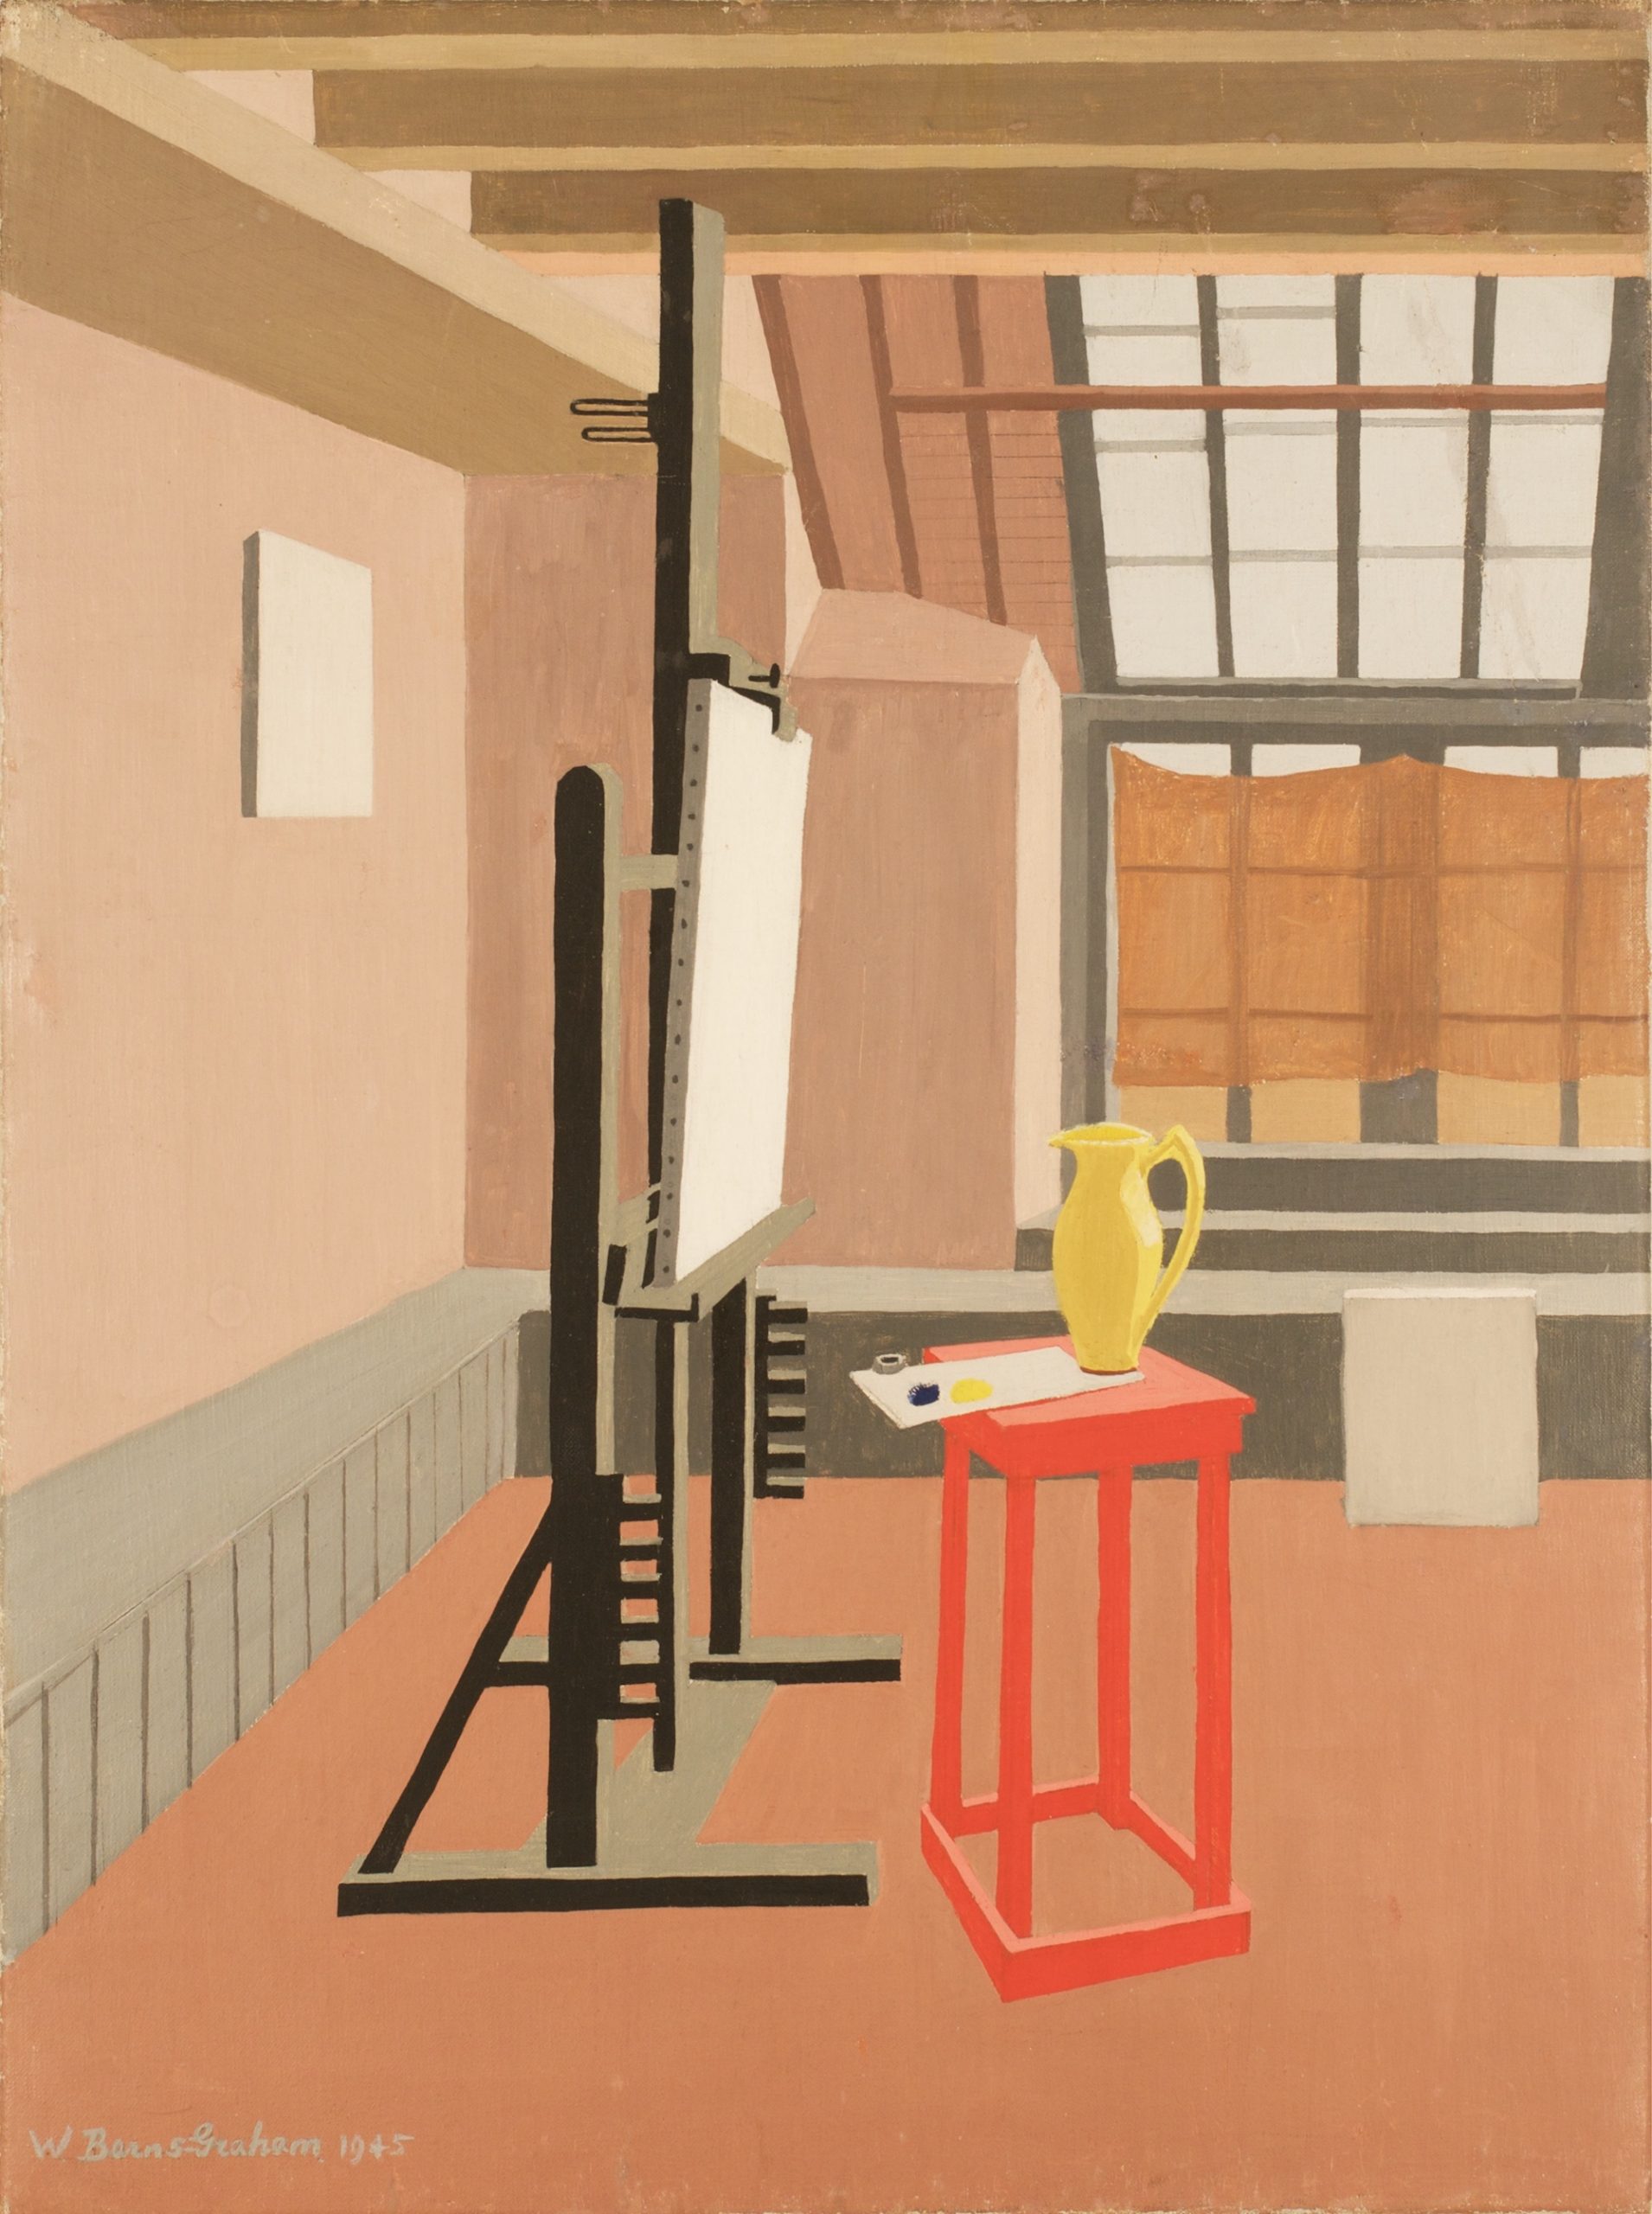 Wilhelmina Barns-Graham, Studio Interior (Red Stool, Studio), 1945 © Wilhelmina Barns-Graham Trust